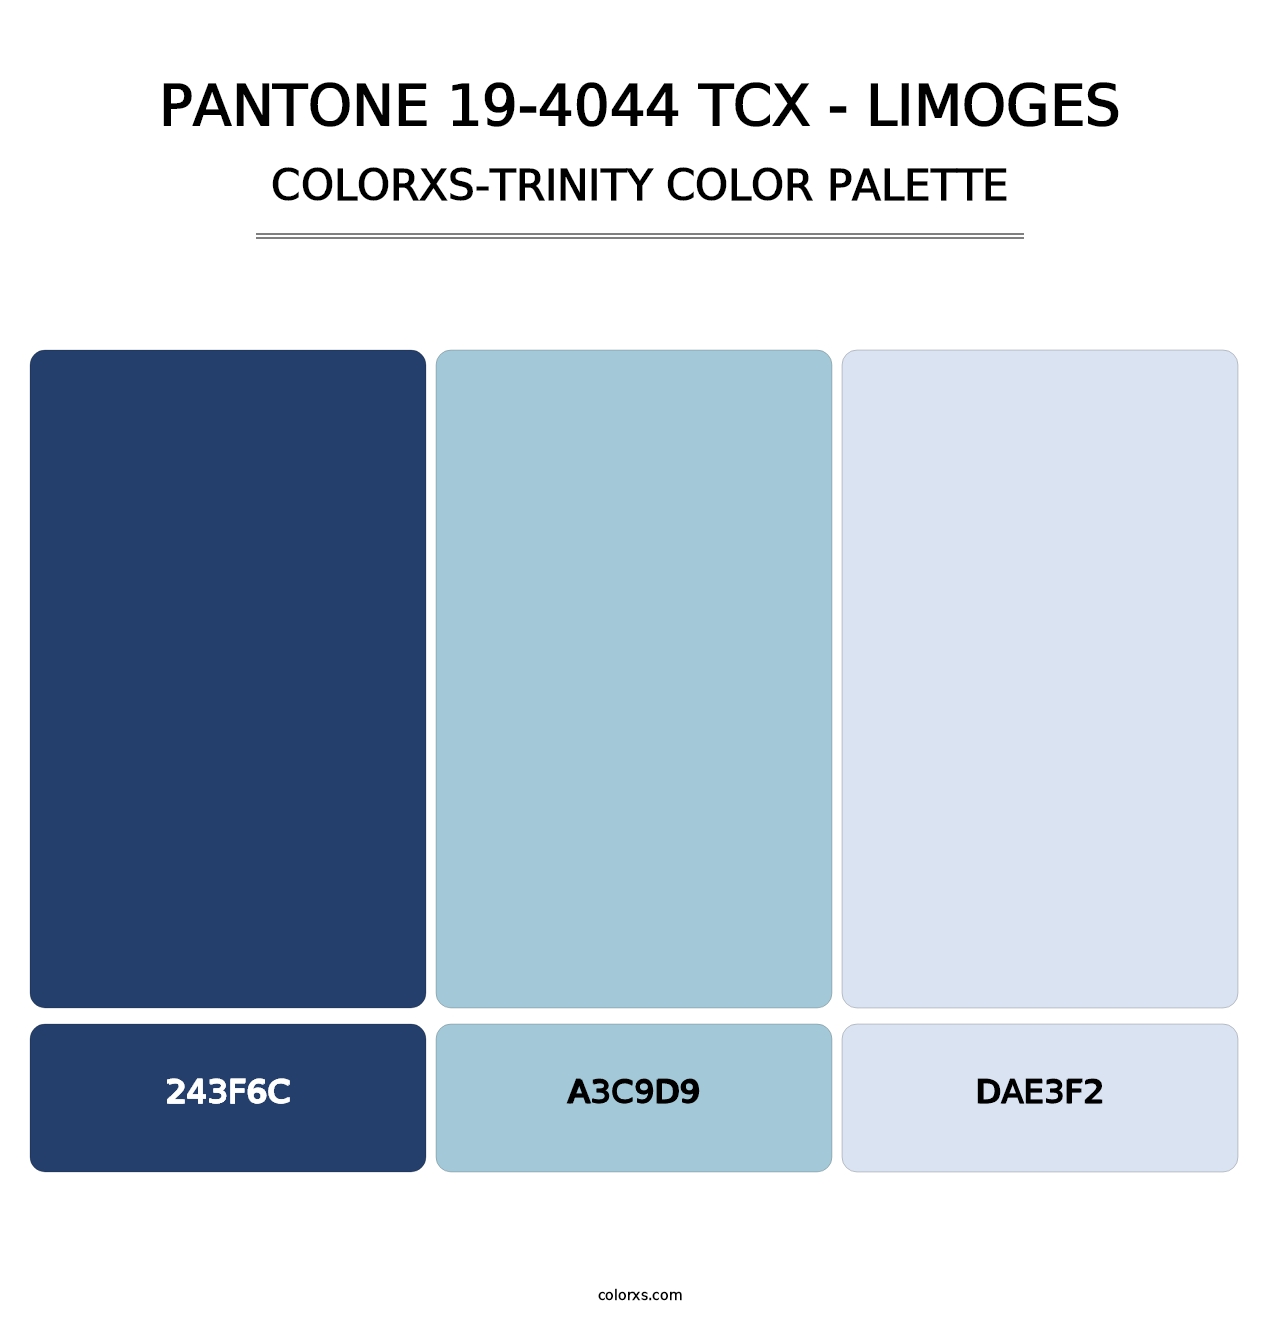 PANTONE 19-4044 TCX - Limoges - Colorxs Trinity Palette